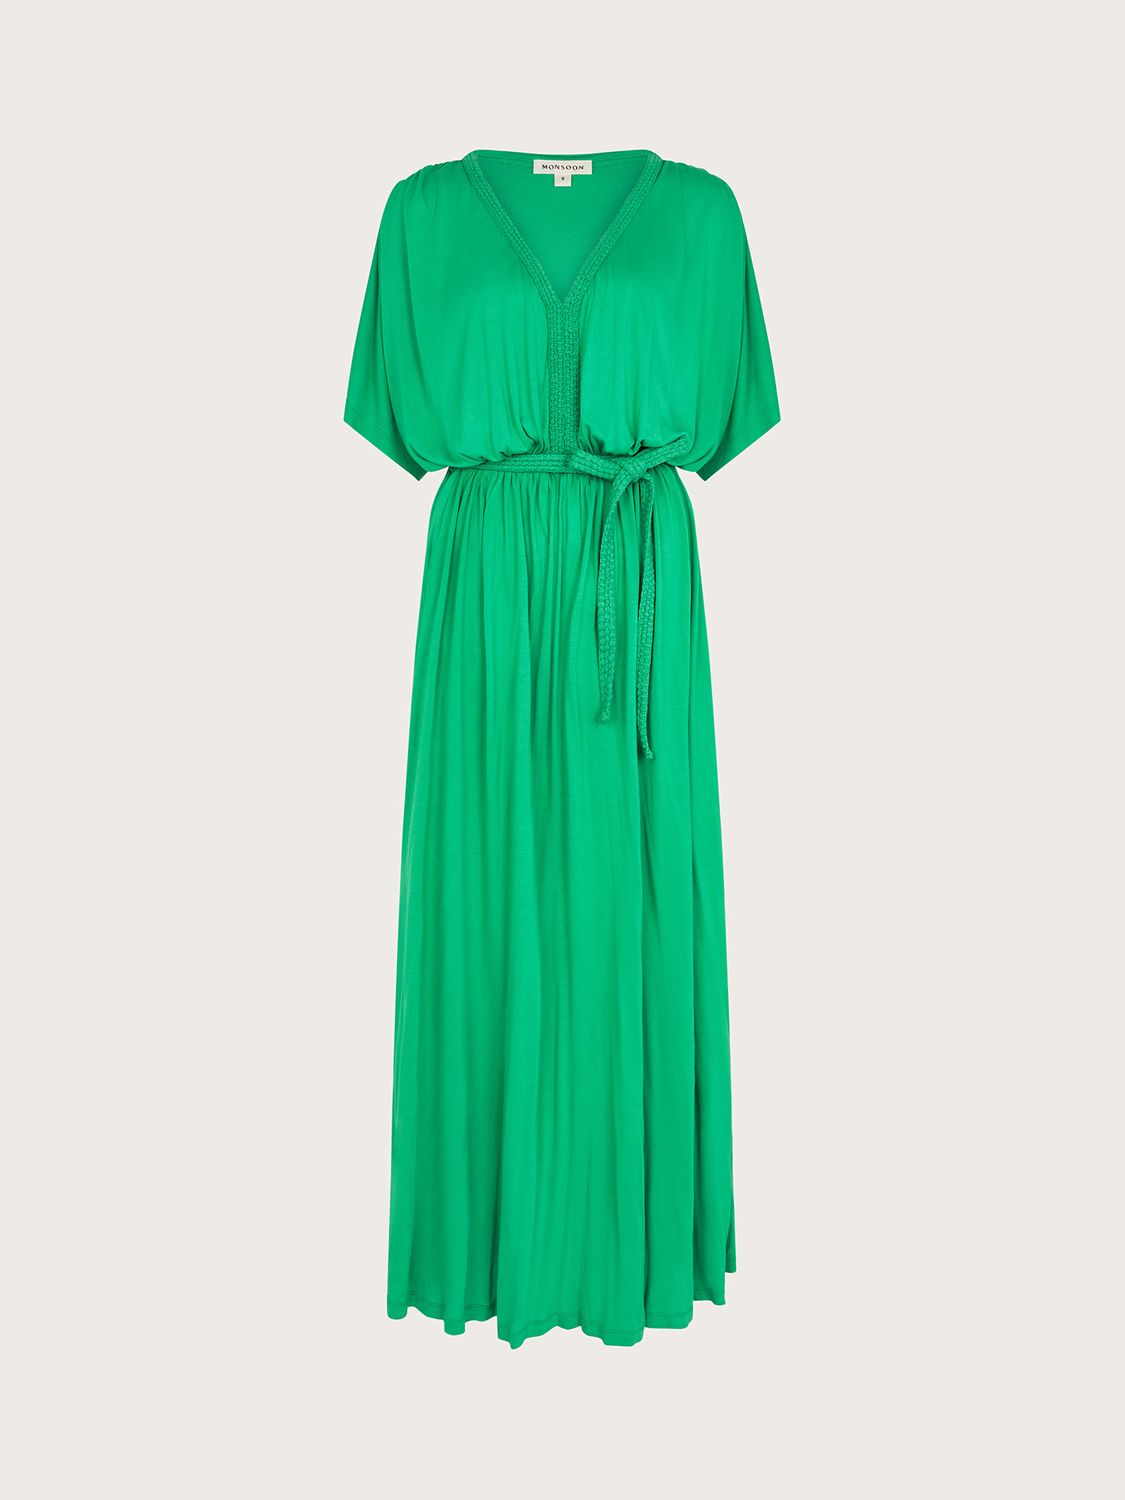 Monsoon Everly Maxi Jersey Dress, Green, S